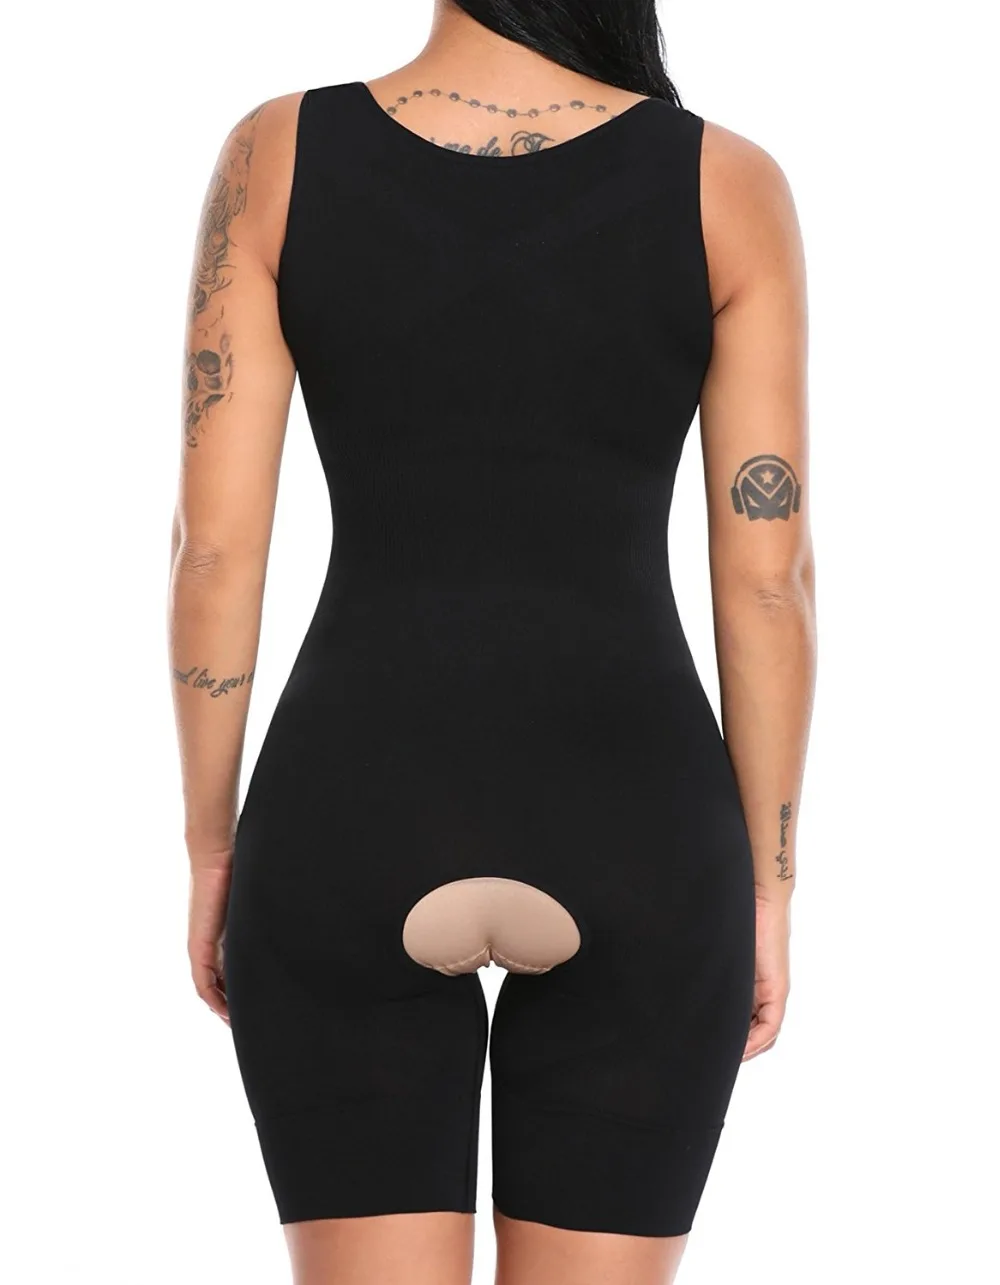 2018 Women's High Quality Slim Corset Slimming Suits Body Shaper Charcoal Sculpting Underwear Slimming Underwear